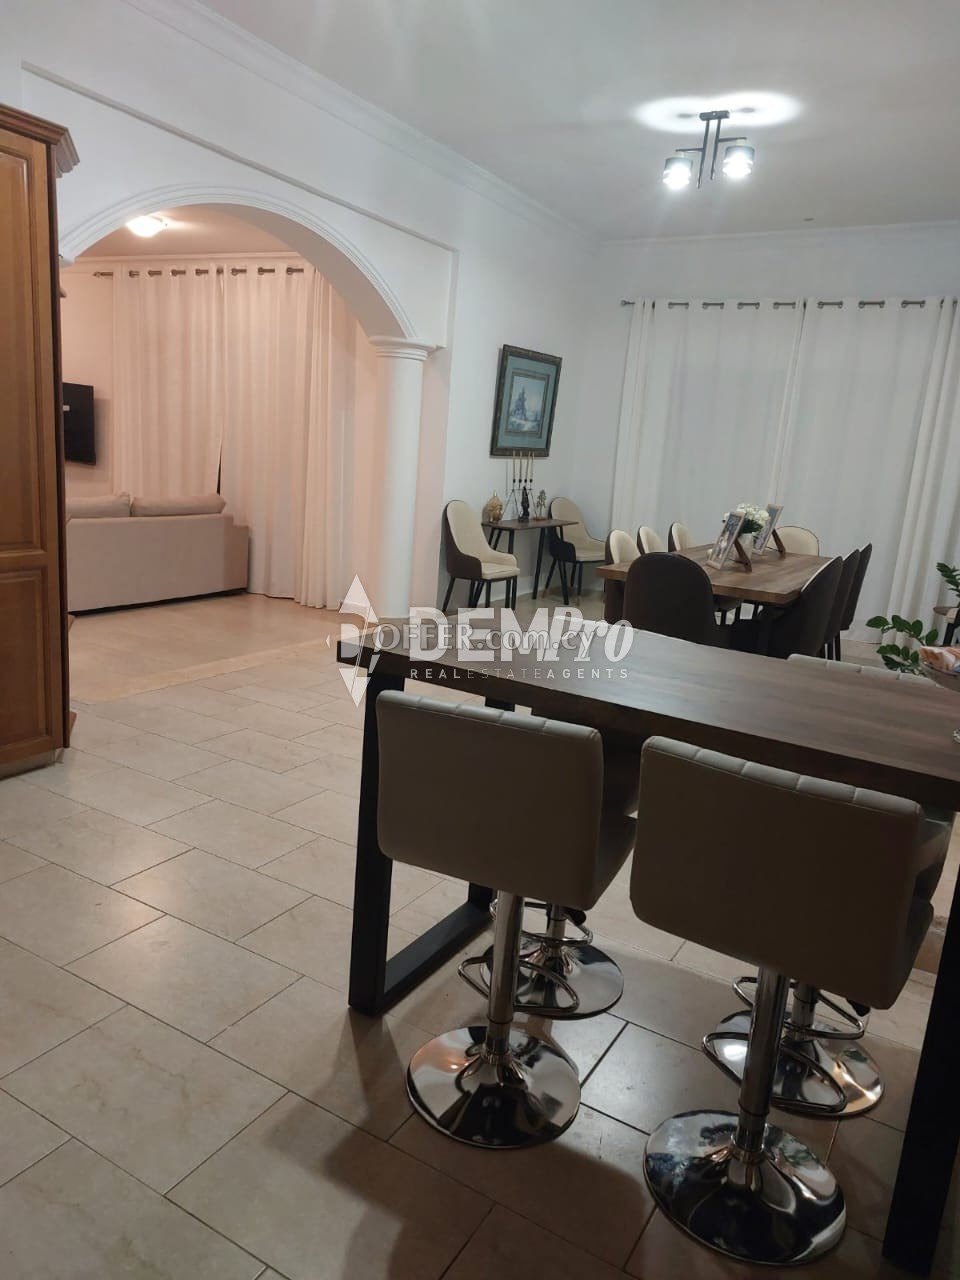 Villa For Rent in Mesogi, Paphos - DP3846 - 4